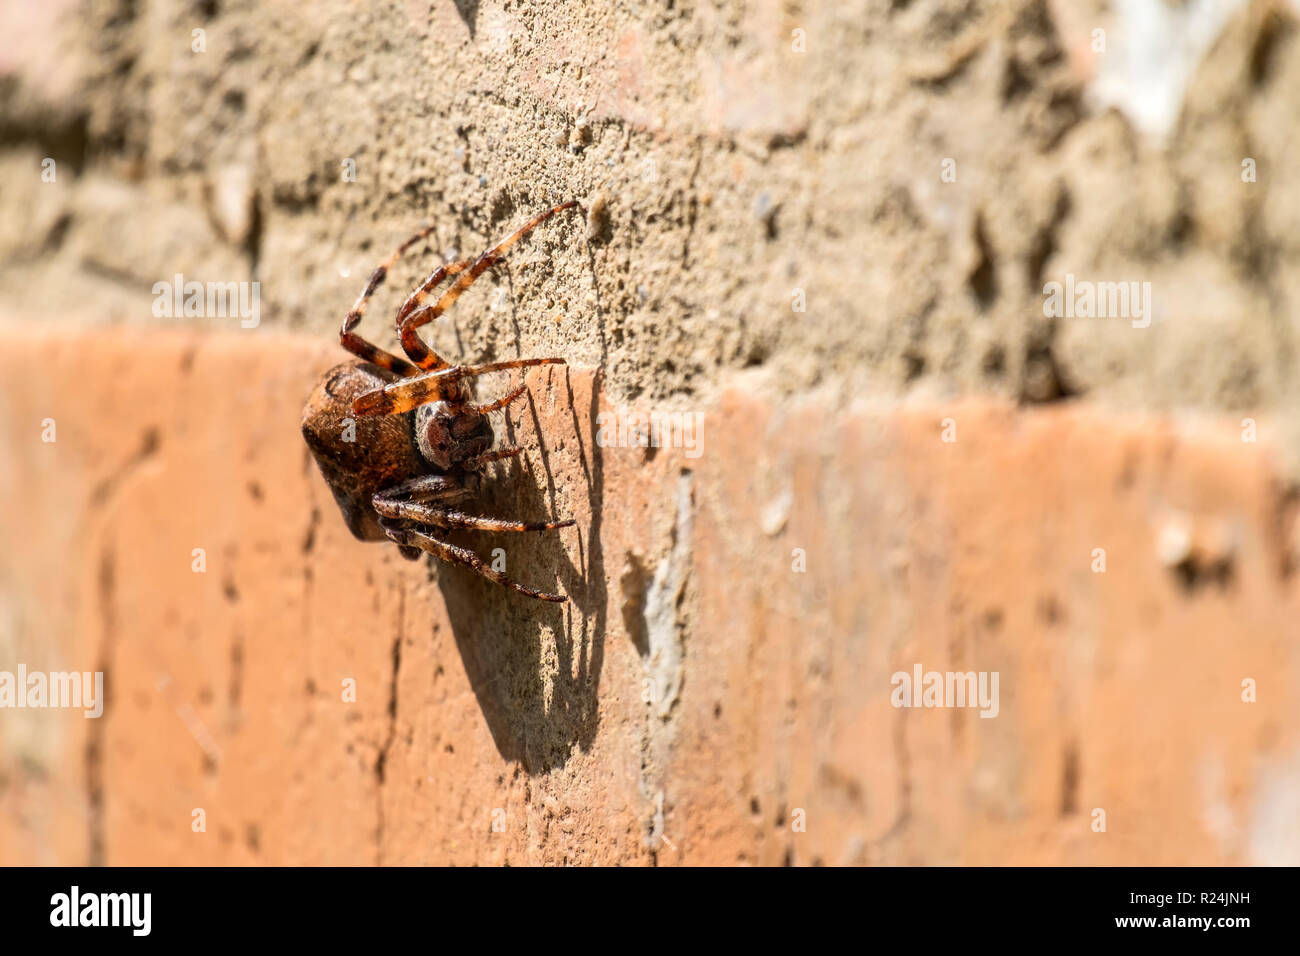 Diadem spider sitting on a brick wall (Araneus diadematus) Stock Photo